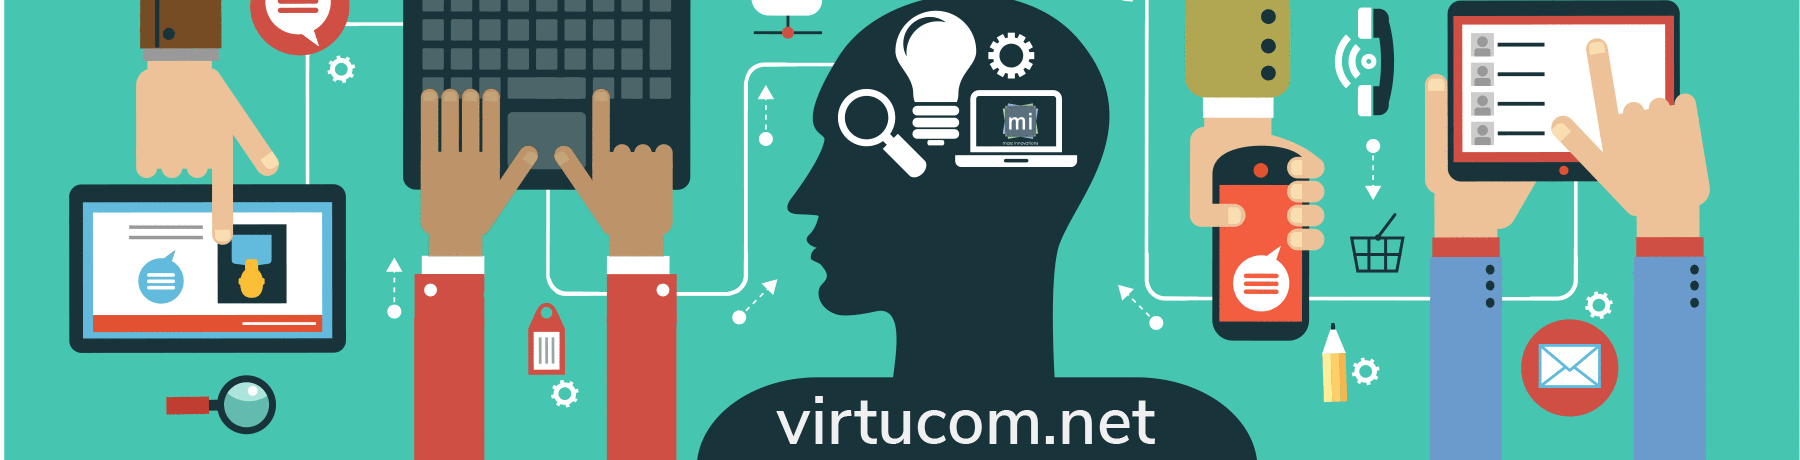 virtucom.net-virtual-assistant-marketing-assistant-communications-social-media-management-Oregon-Idaho-Colorado-Arizona-New-Mexico-California